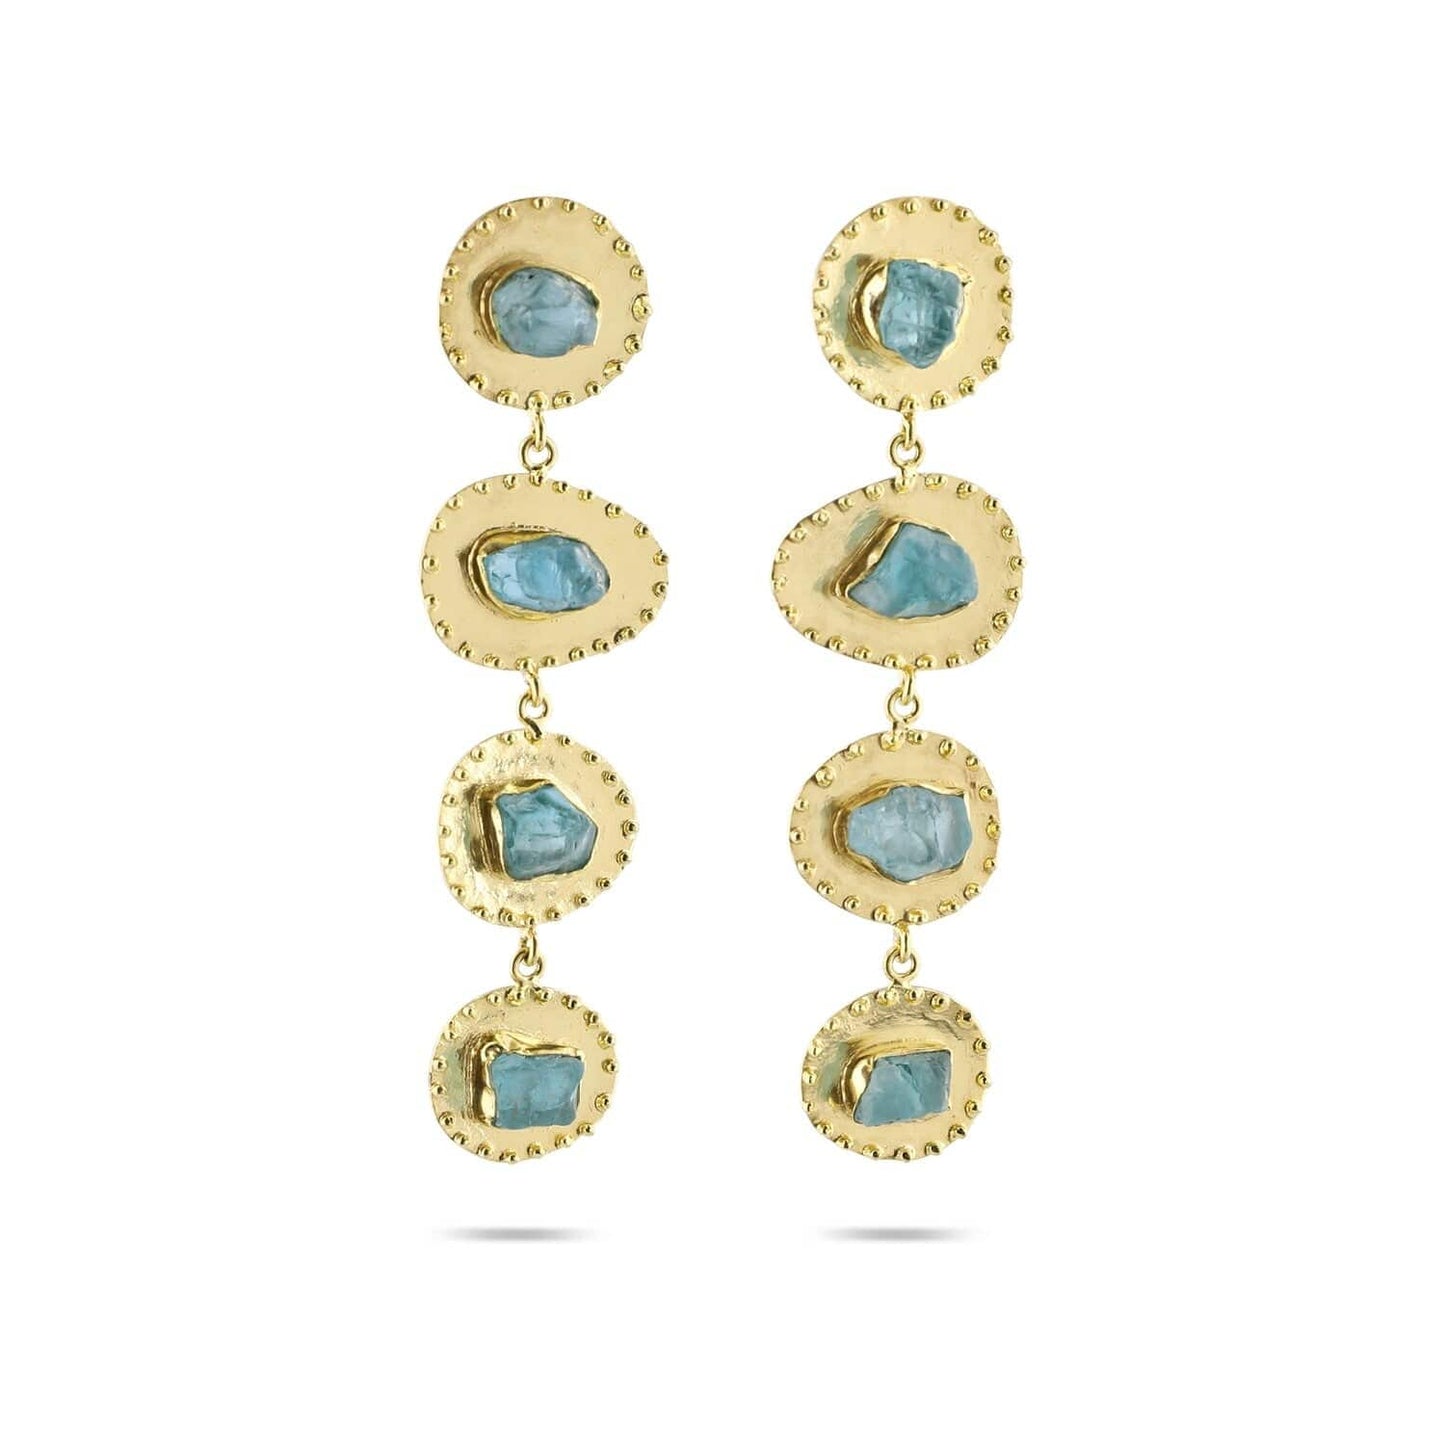 Christine Bekaert Jewelry Earring Pharos